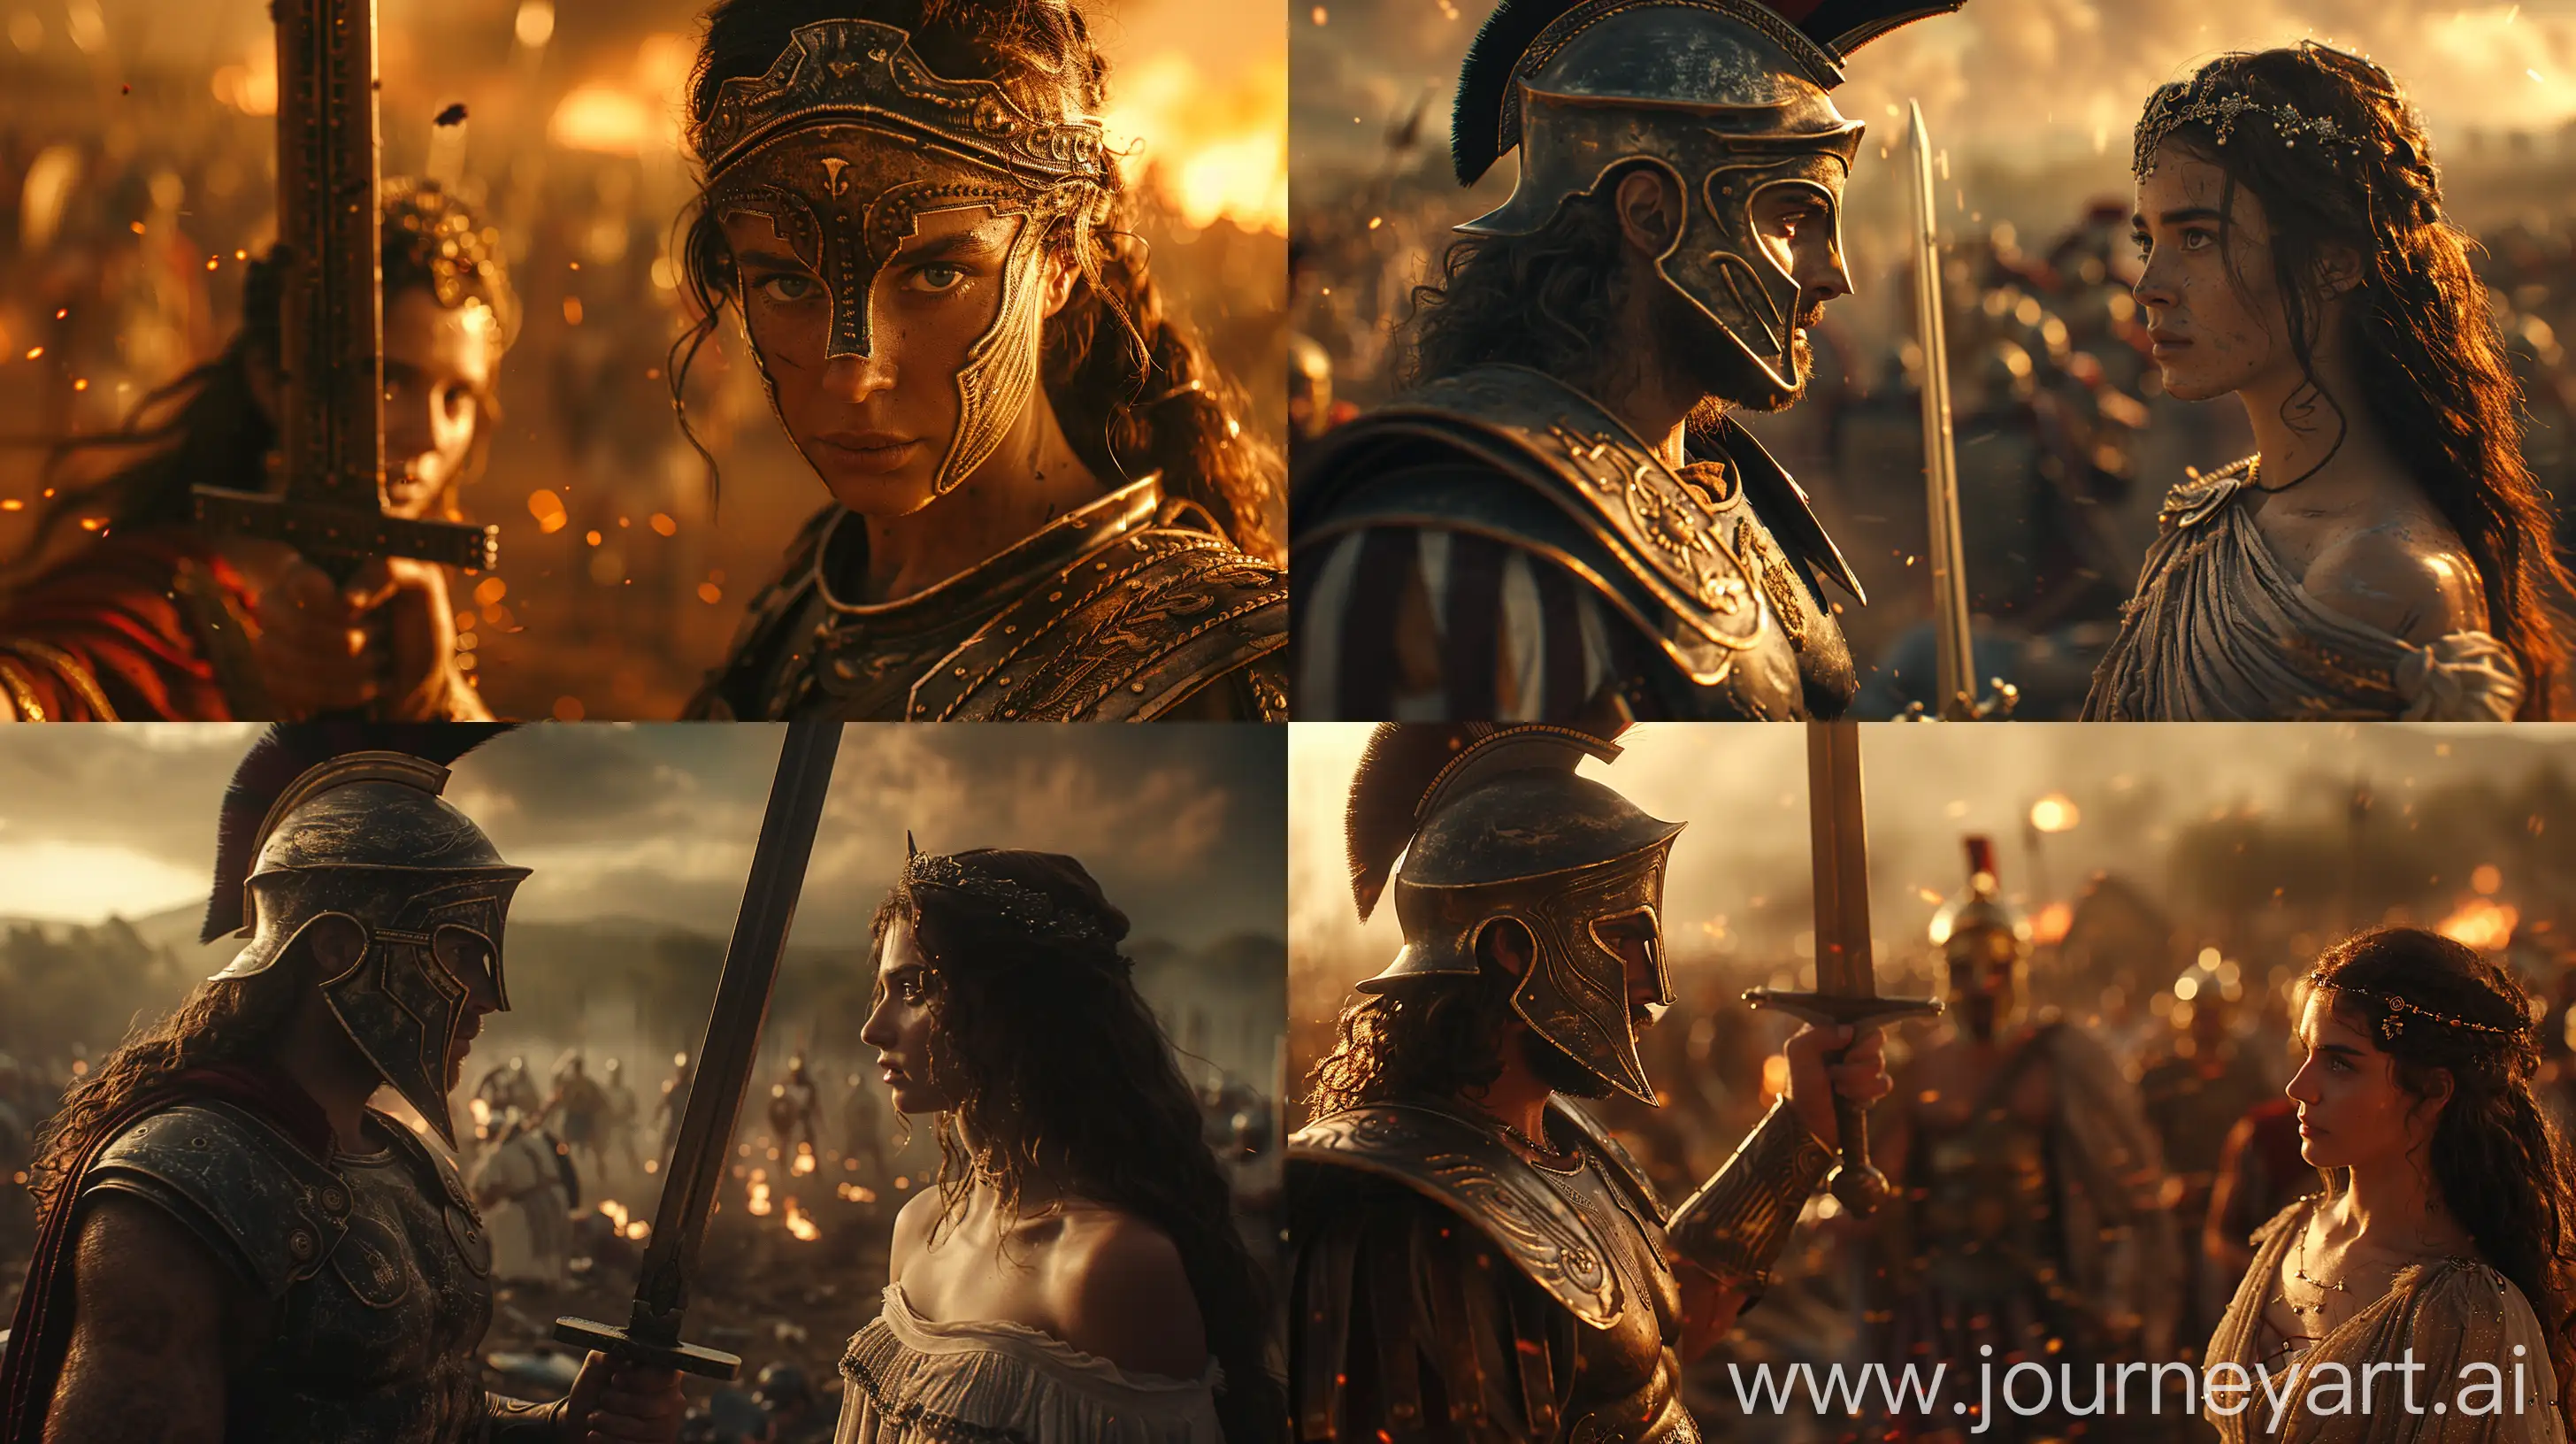 Epic-Battle-Scene-Ancient-Greek-Soldier-Defends-Radiant-Queen